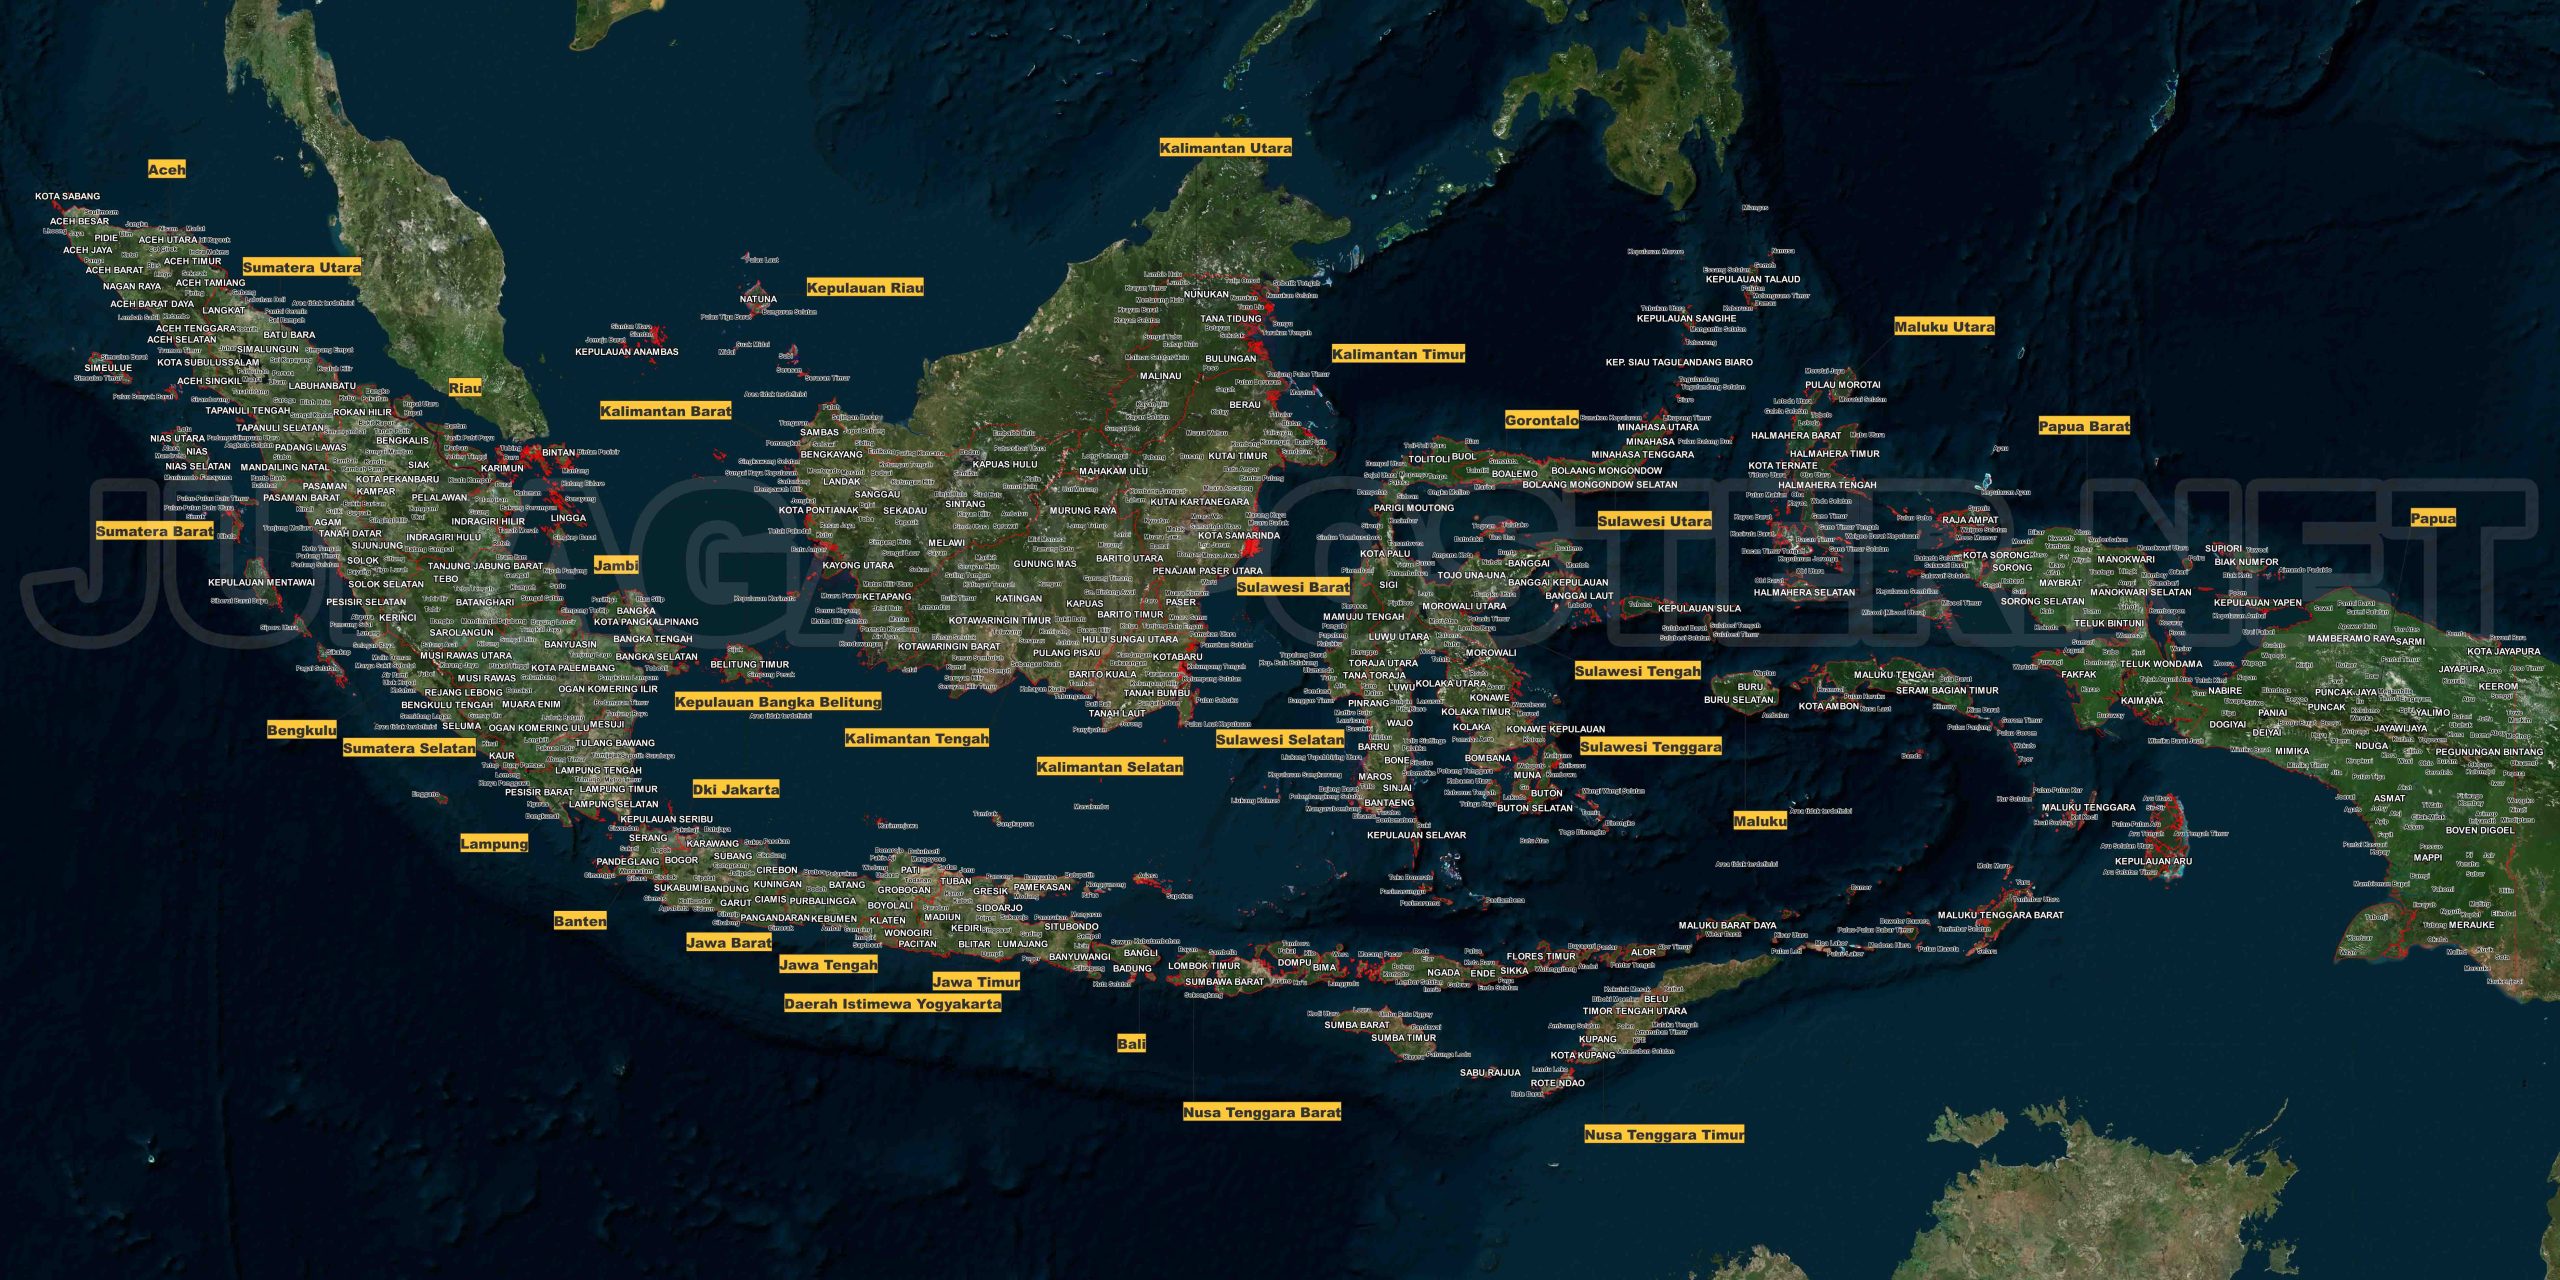 Jejak Kedatangan Belanda ke Indonesia: Menyusuri Peta Sejarah Kolonial